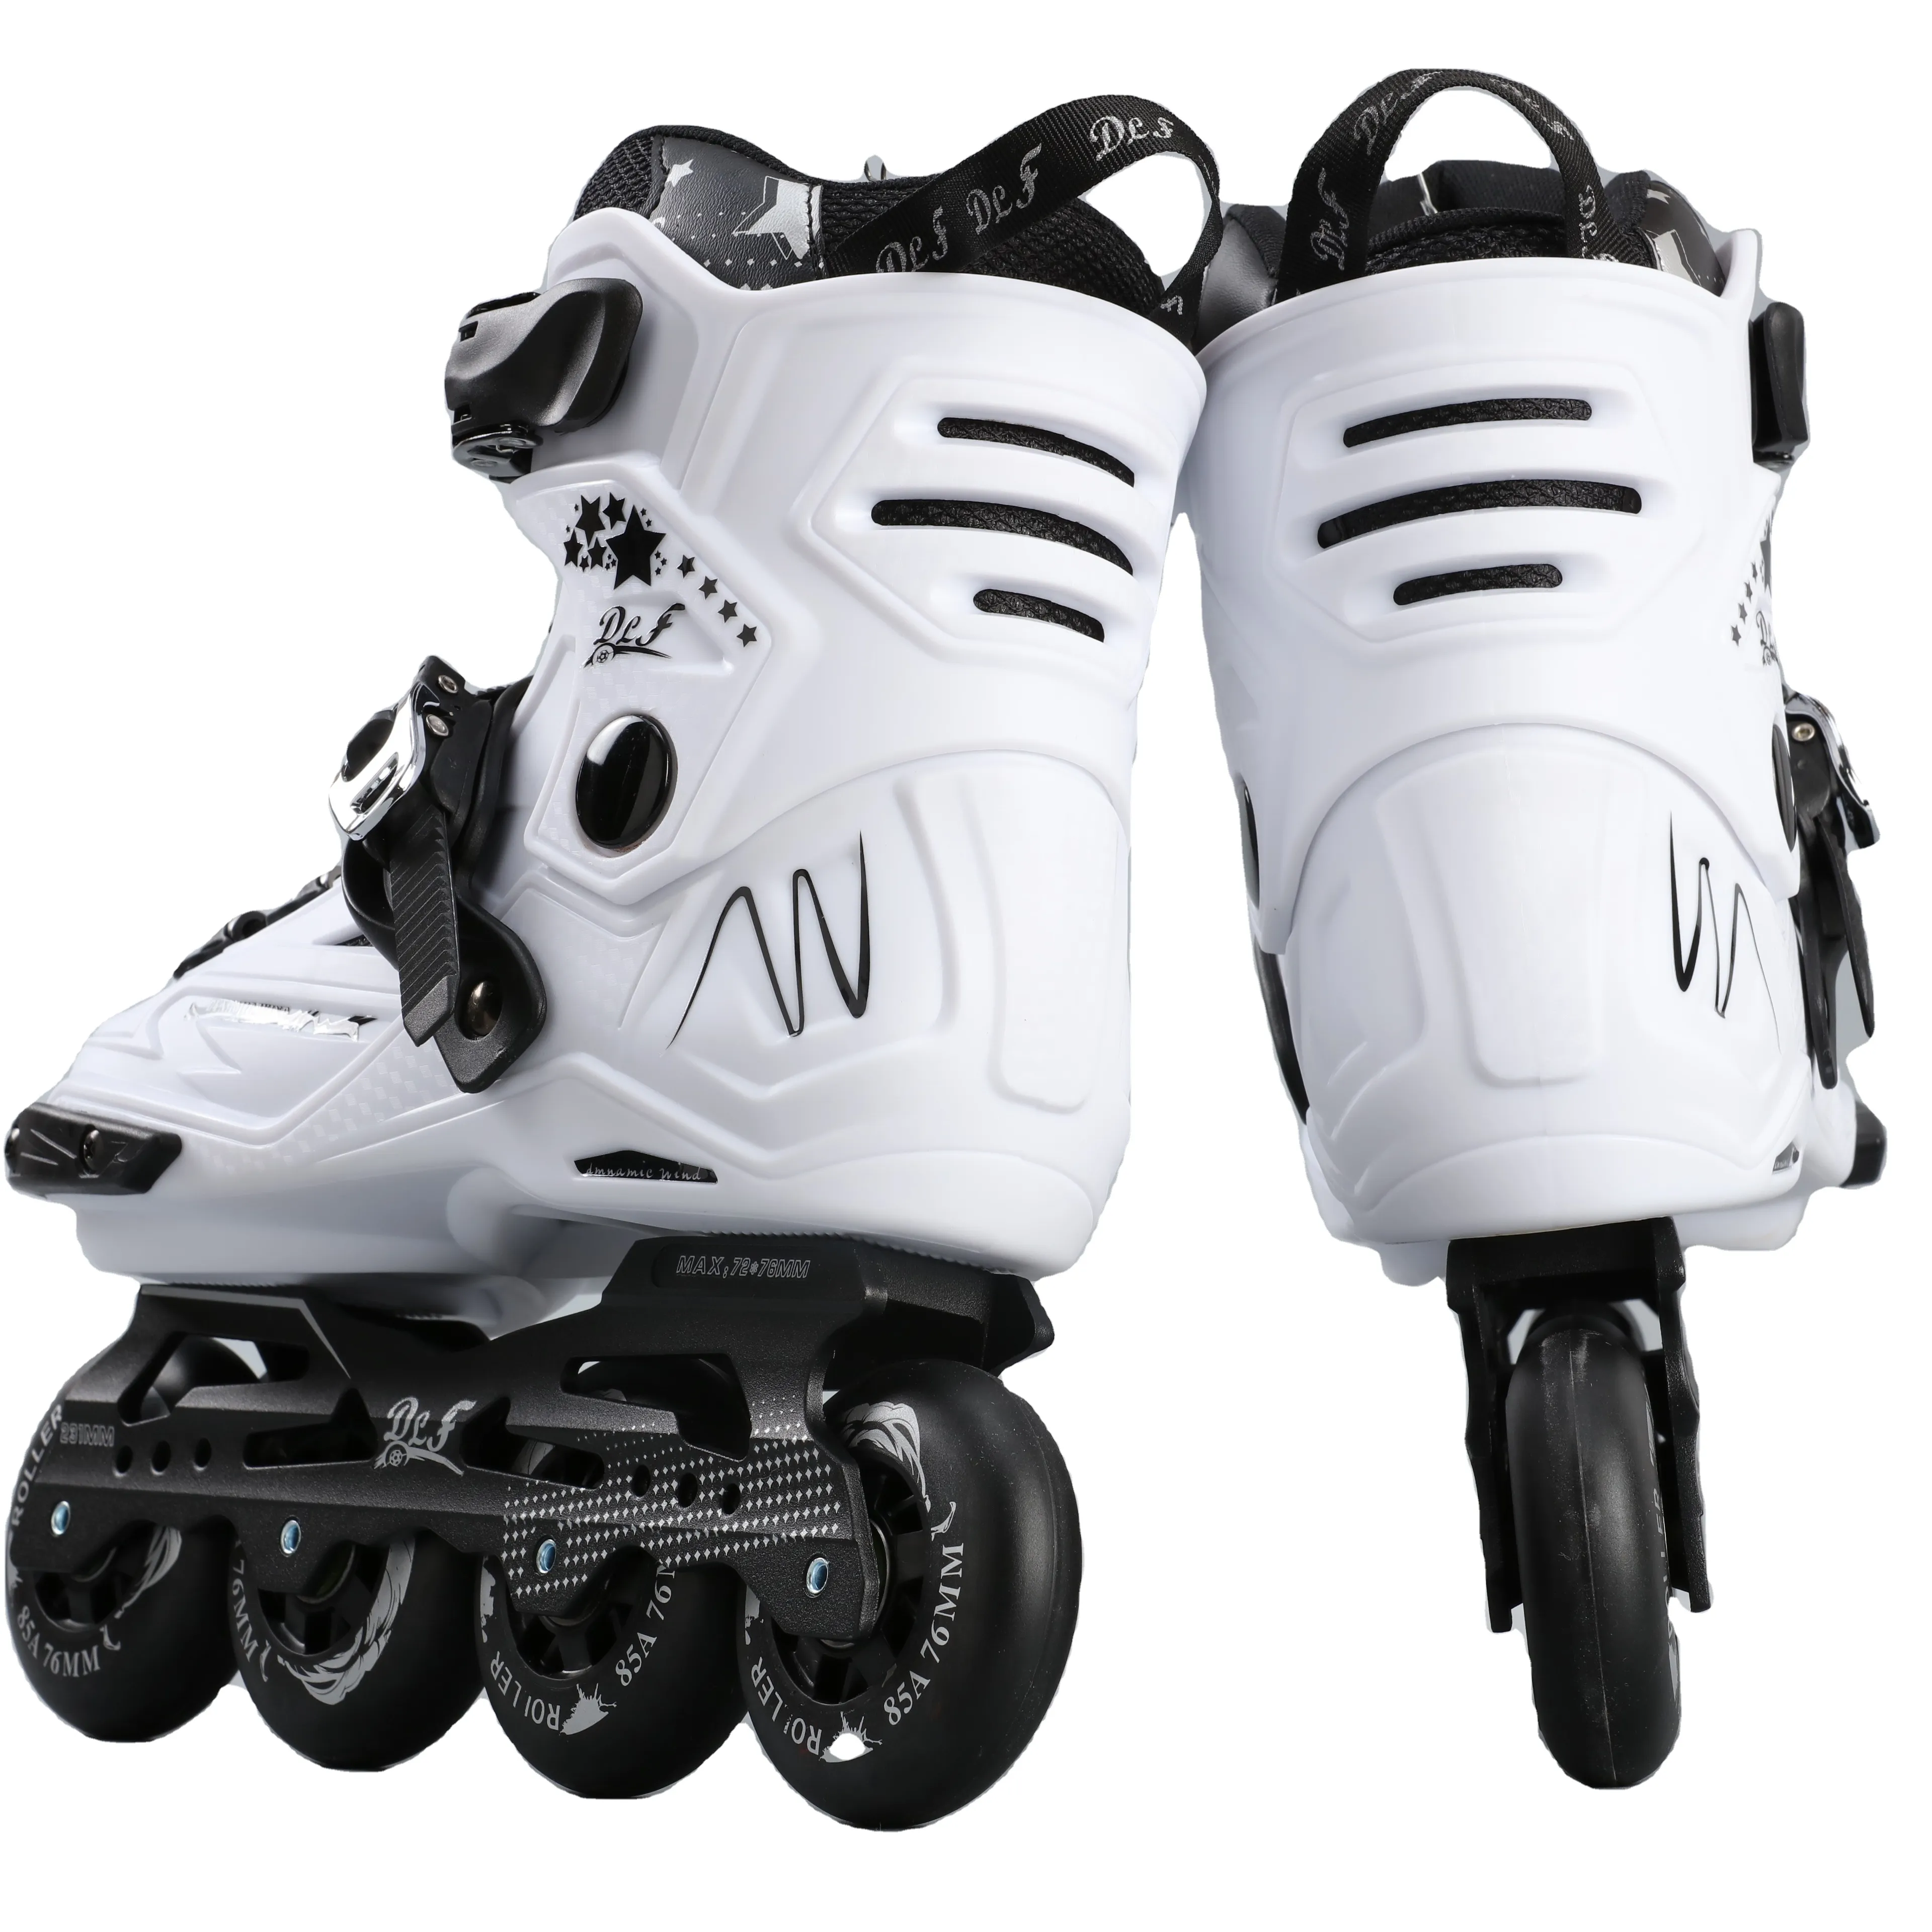 Adjustable professional roller skates for kids or teenagers inline skates outdoor sports